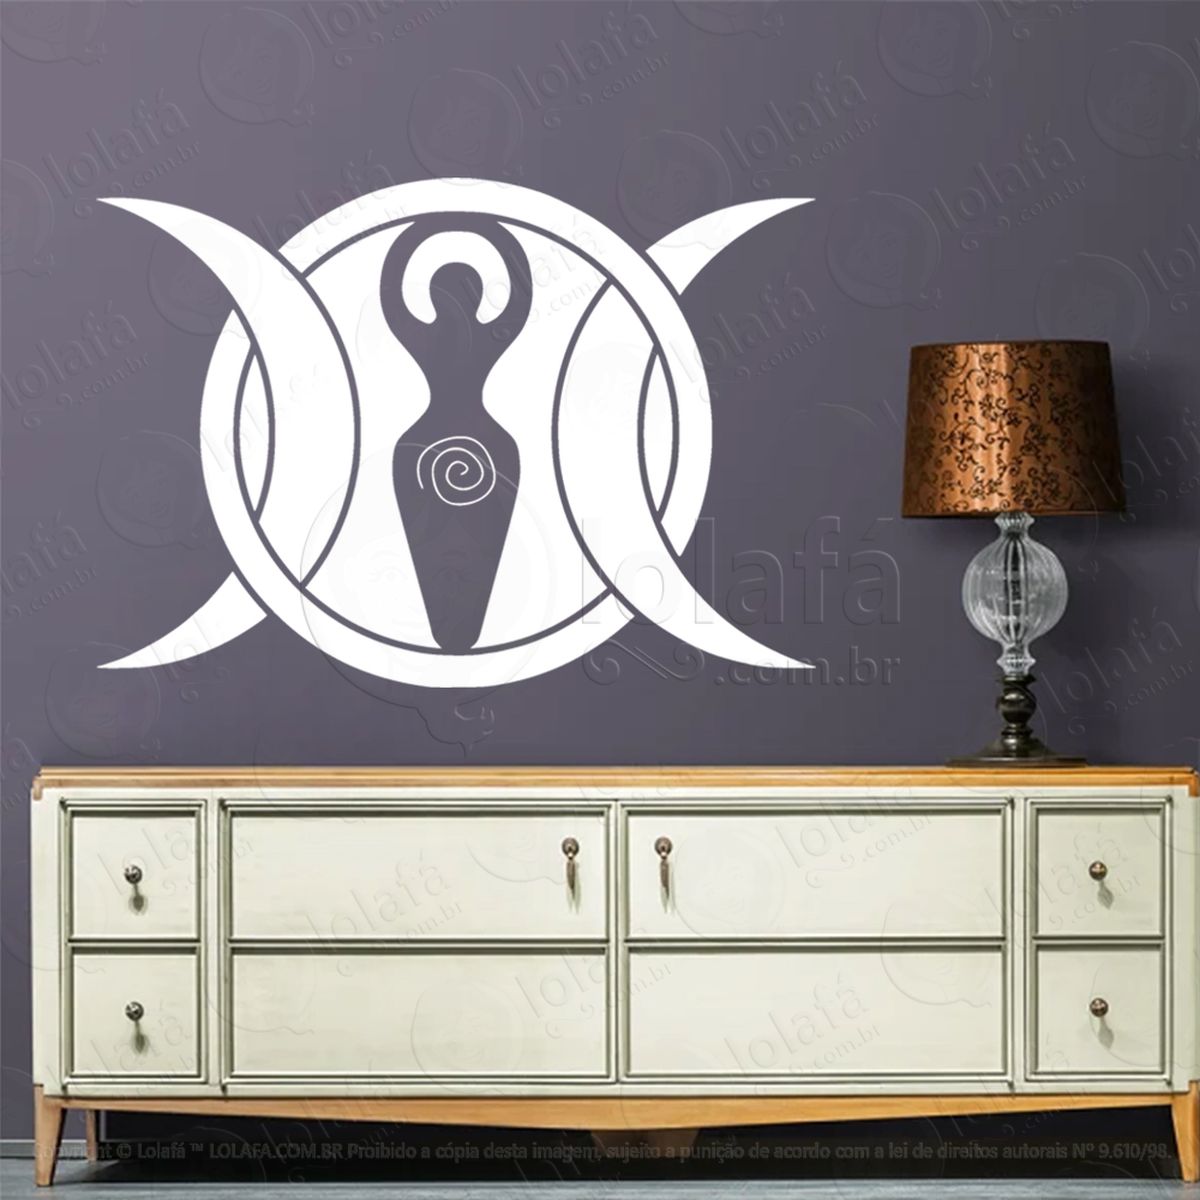 espiral trimoon adesivo de parede decorativo para casa, sala, quarto, vidro e altar ocultista - mod:71